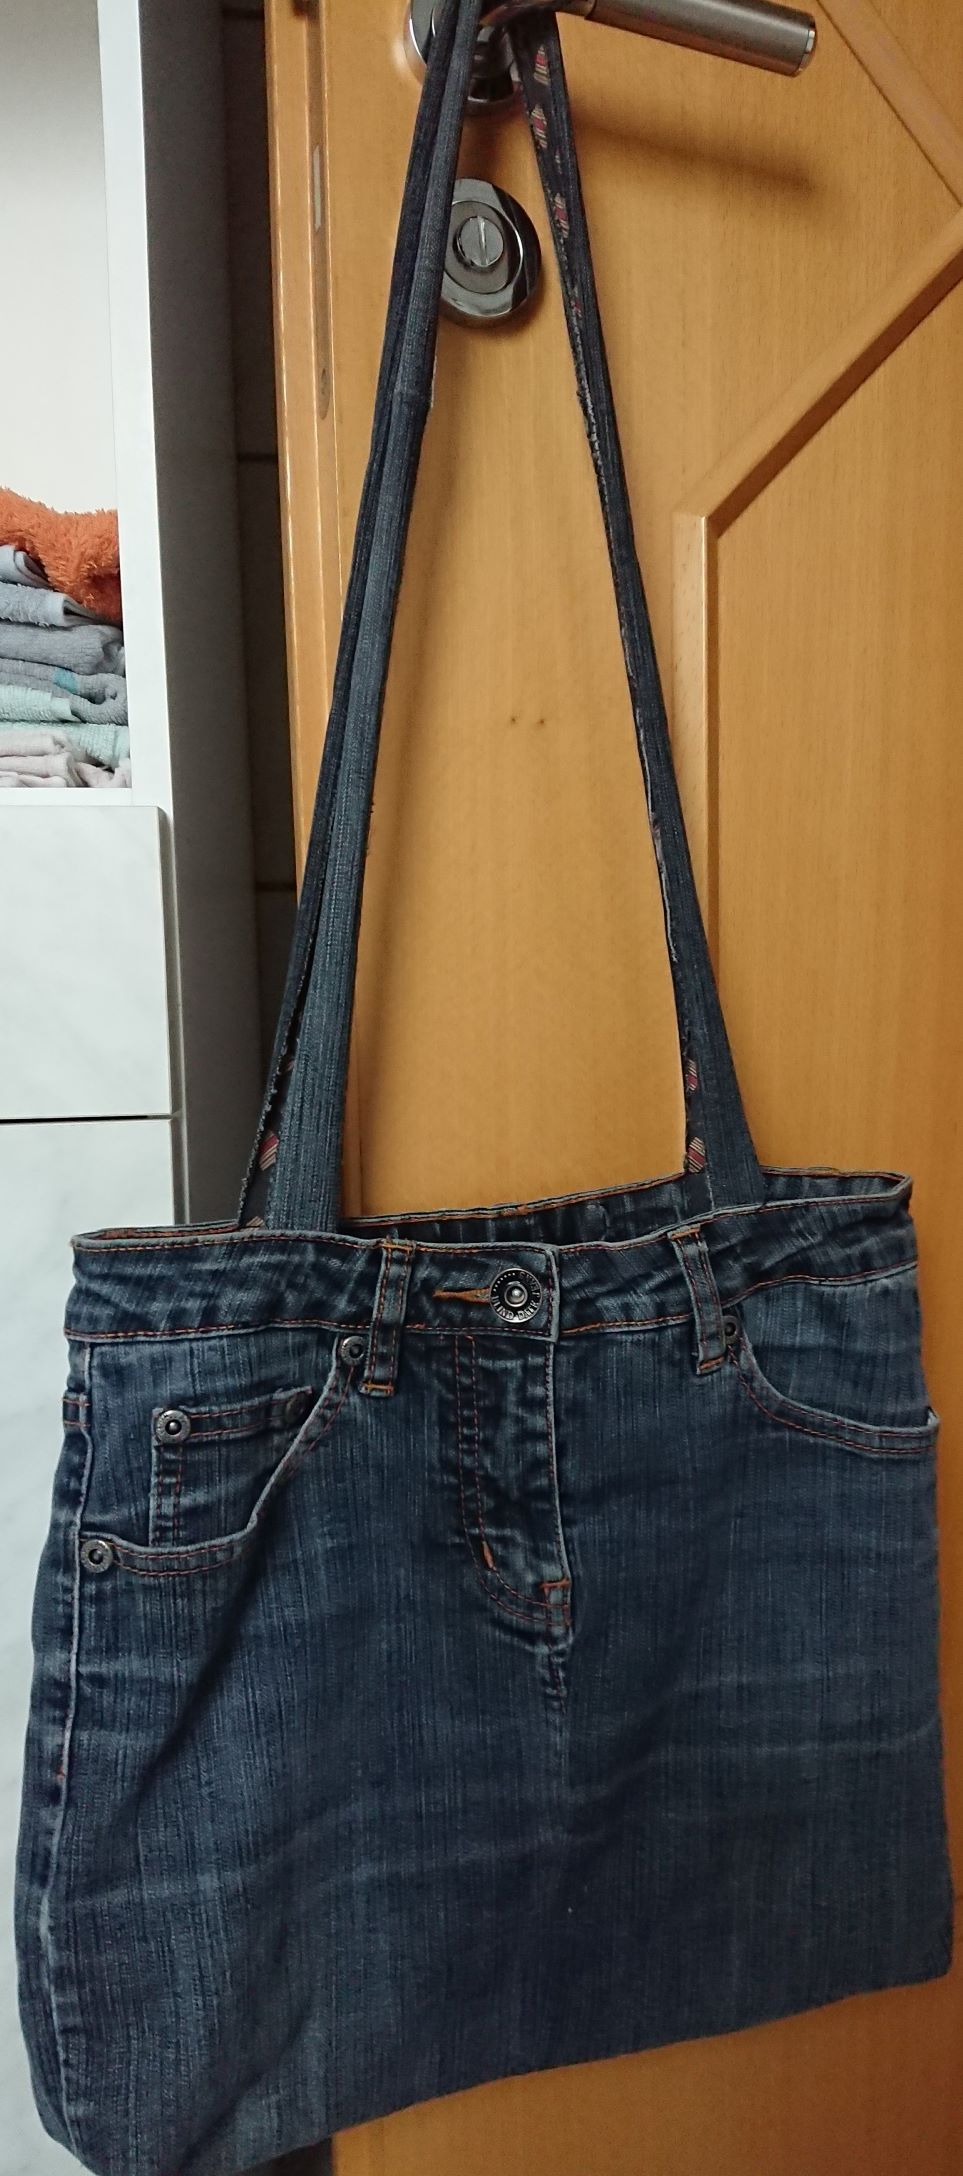 Stofftasche aus alter Jeanshose - Brigitte Pawlowski I.jpg